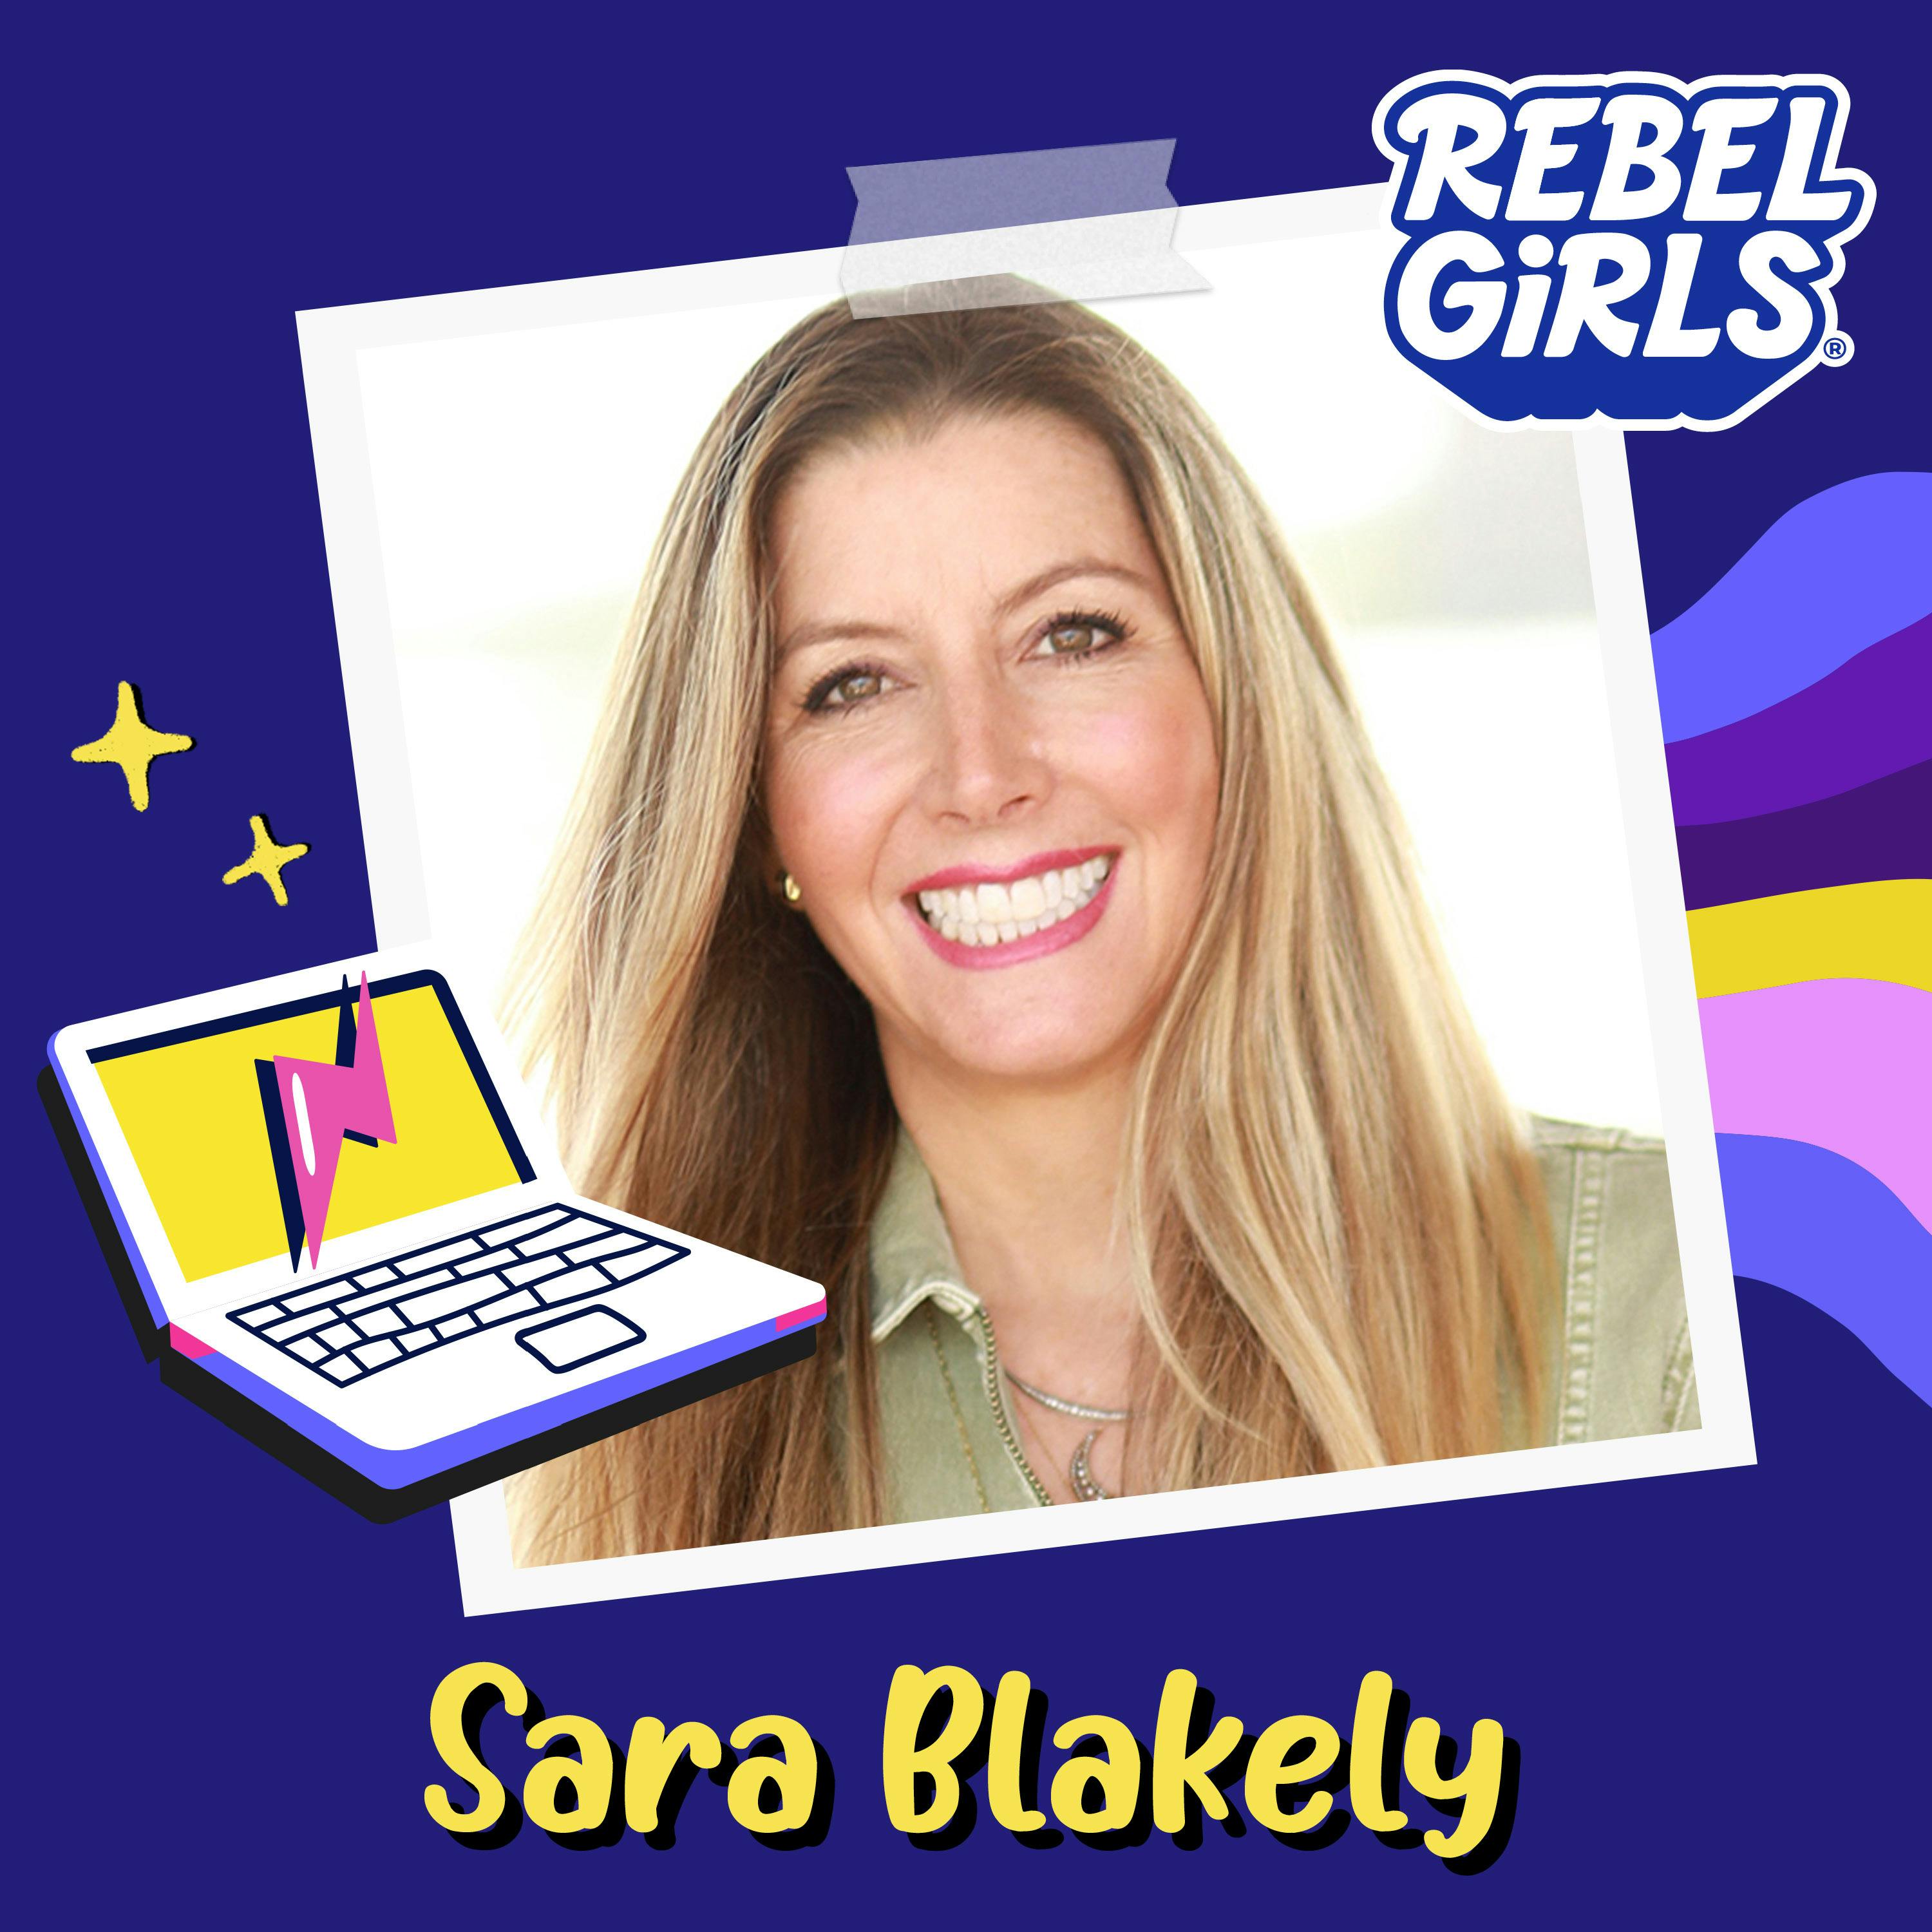 Get to Know Sara Blakely